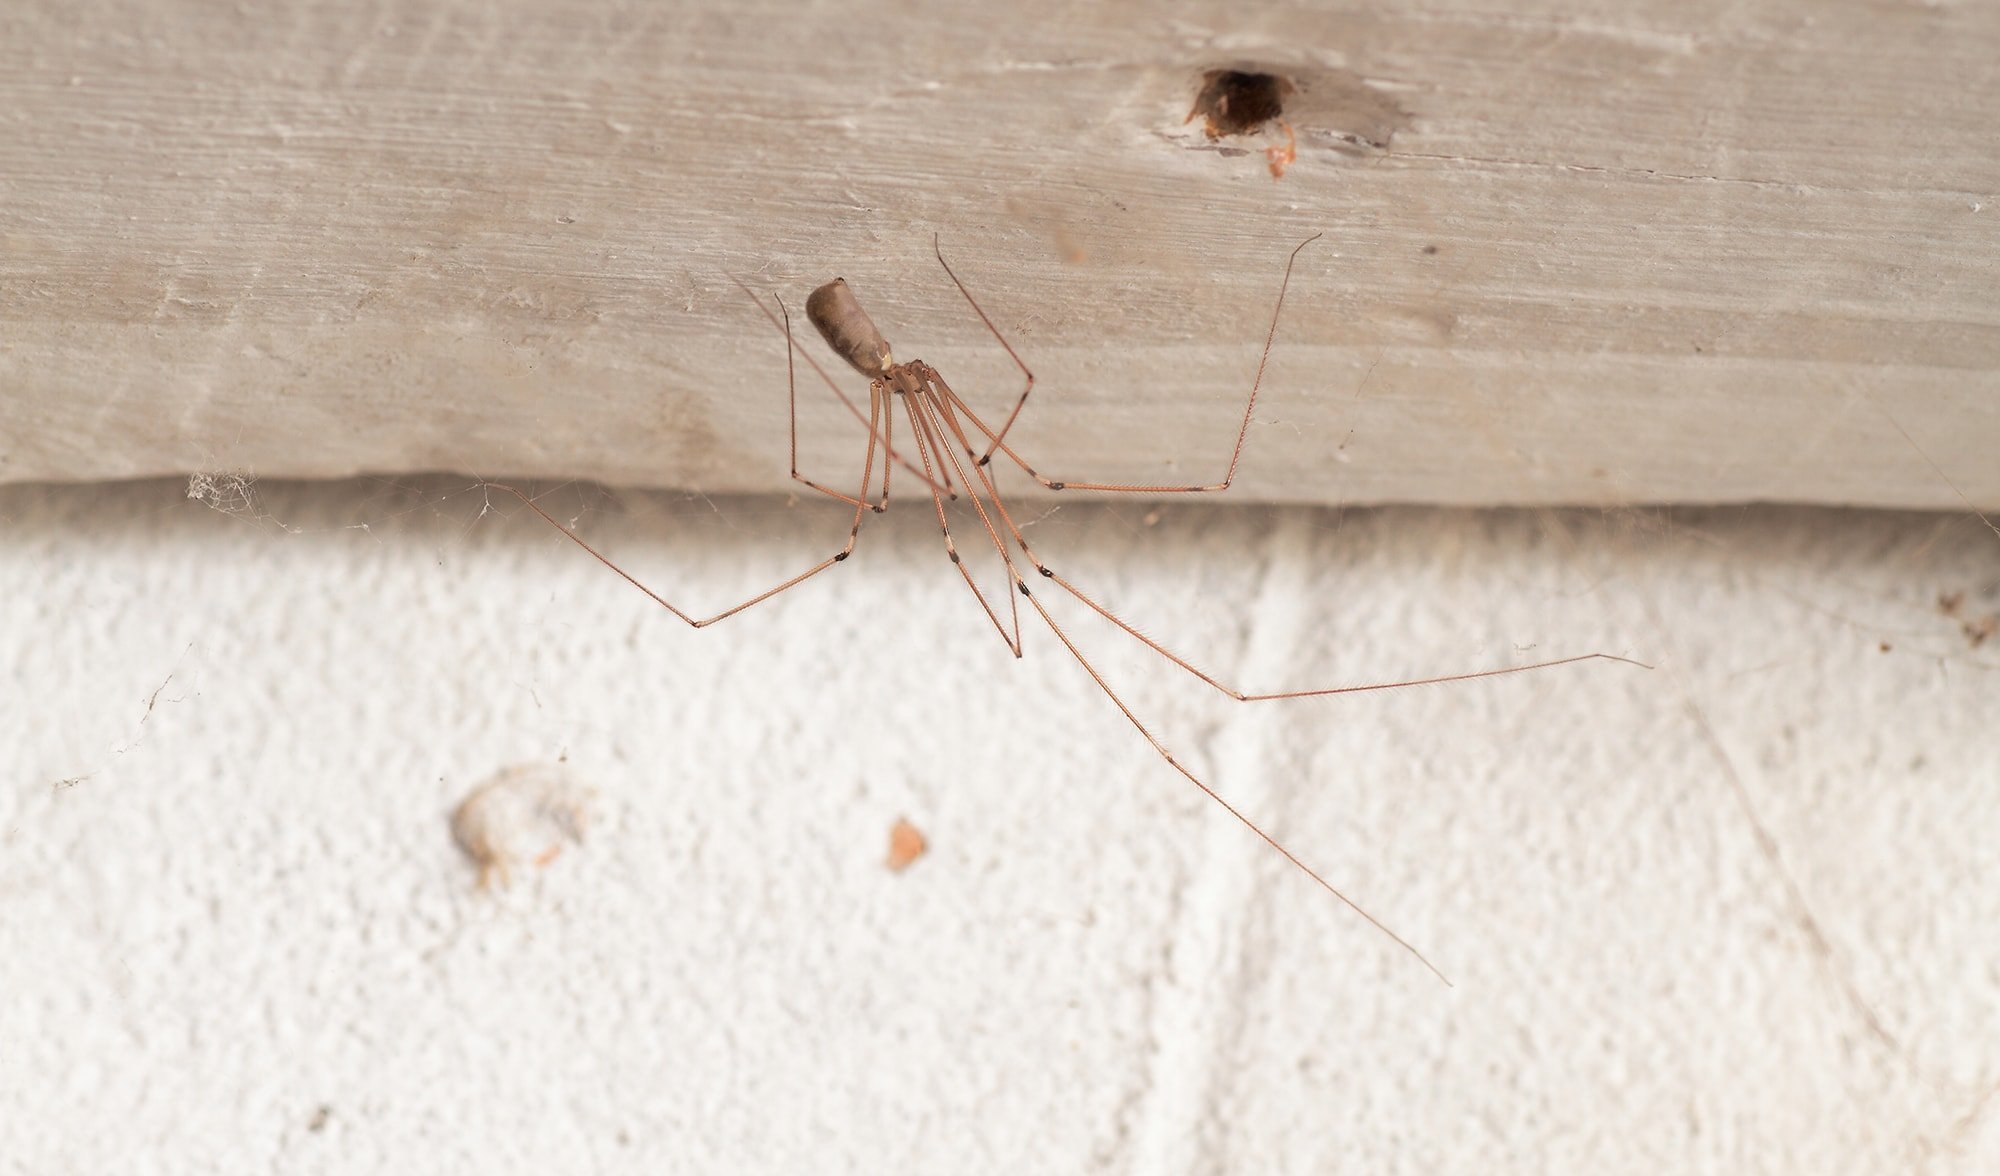 Daddy long-legs spider - Australian Geographic